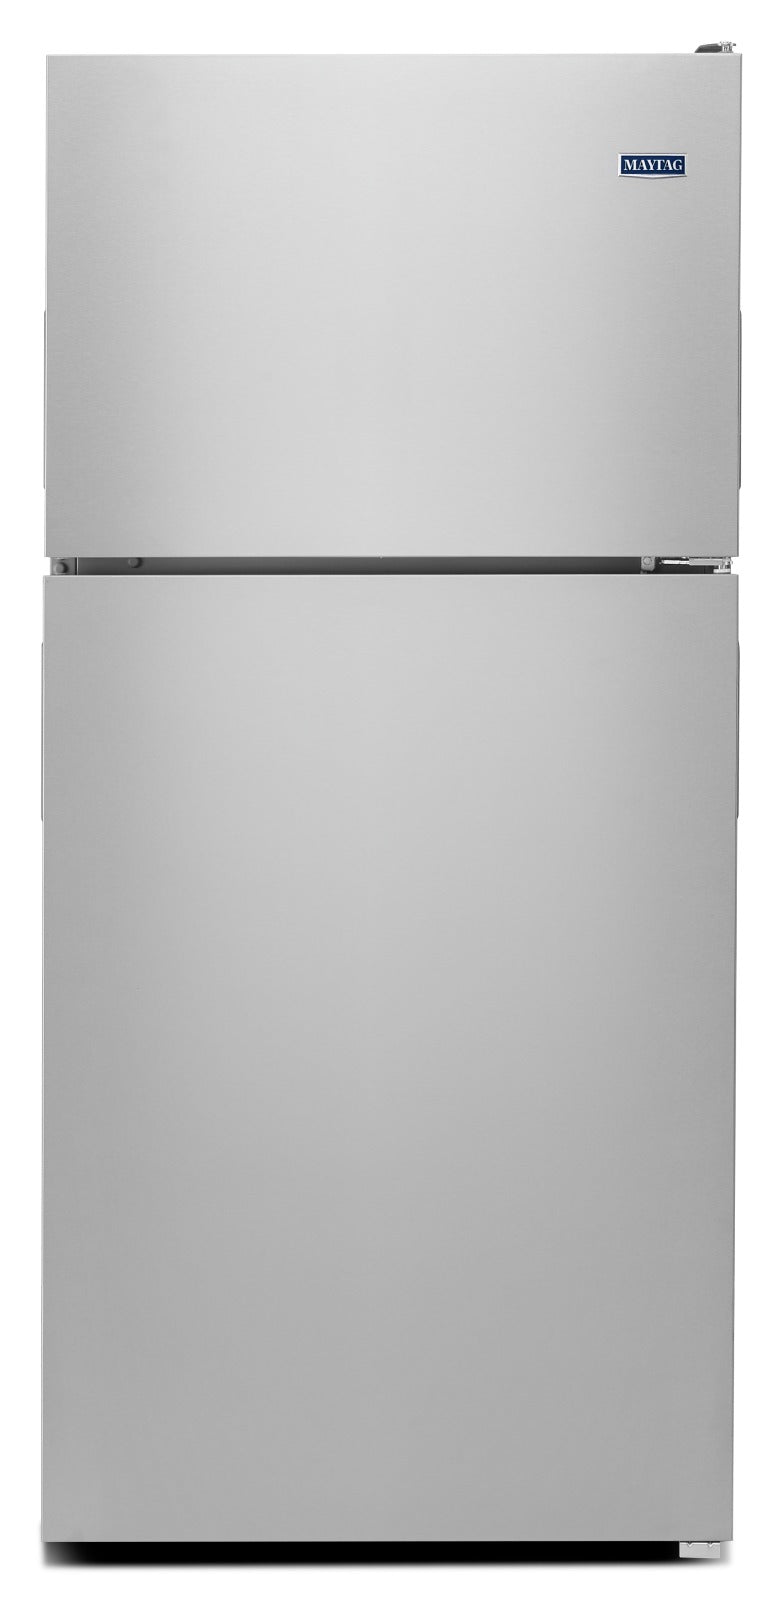  Maytag 21 Cu. Ft. Top-Freezer Refrigerator - MRT311FFFZ - Refrigerator in Fingerprint Resistant Stainless Steel